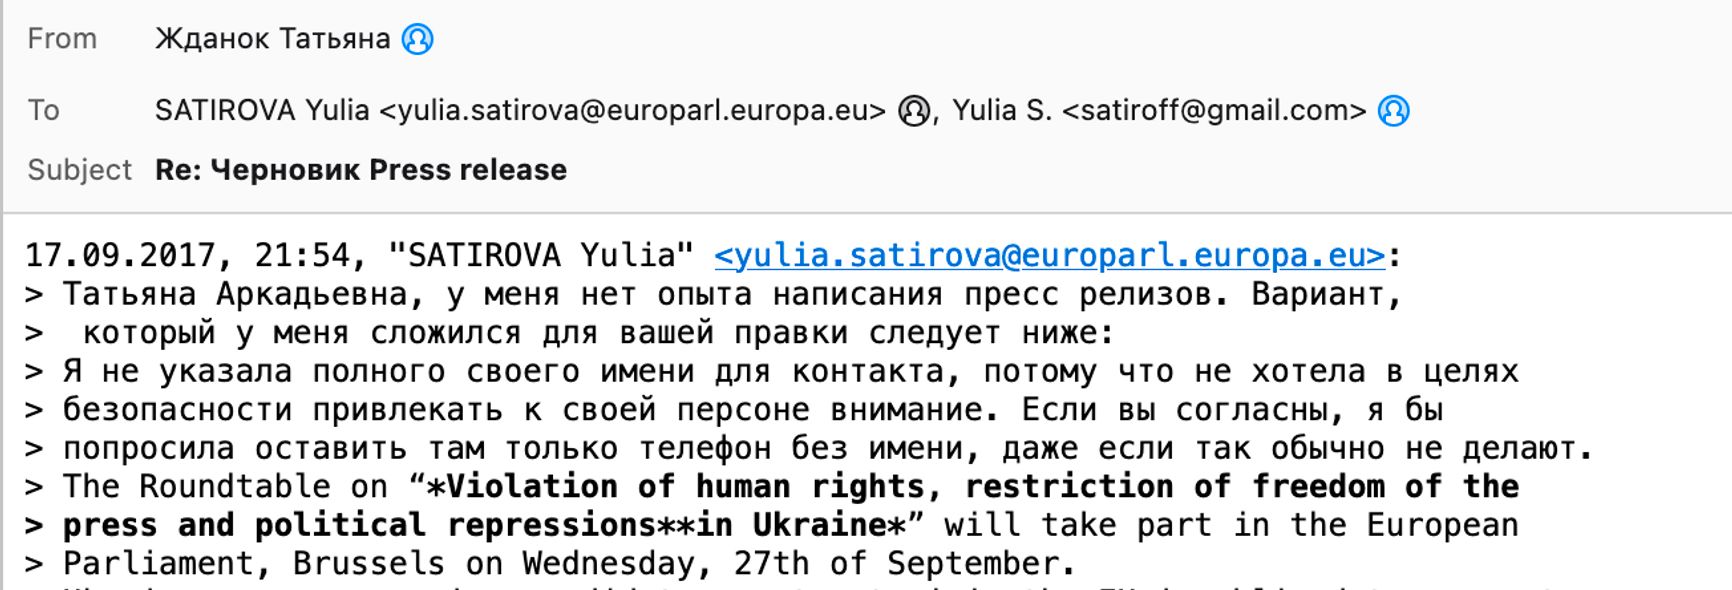 Screenshot of email addressed to Yulia Satirova on September 17, 2017.